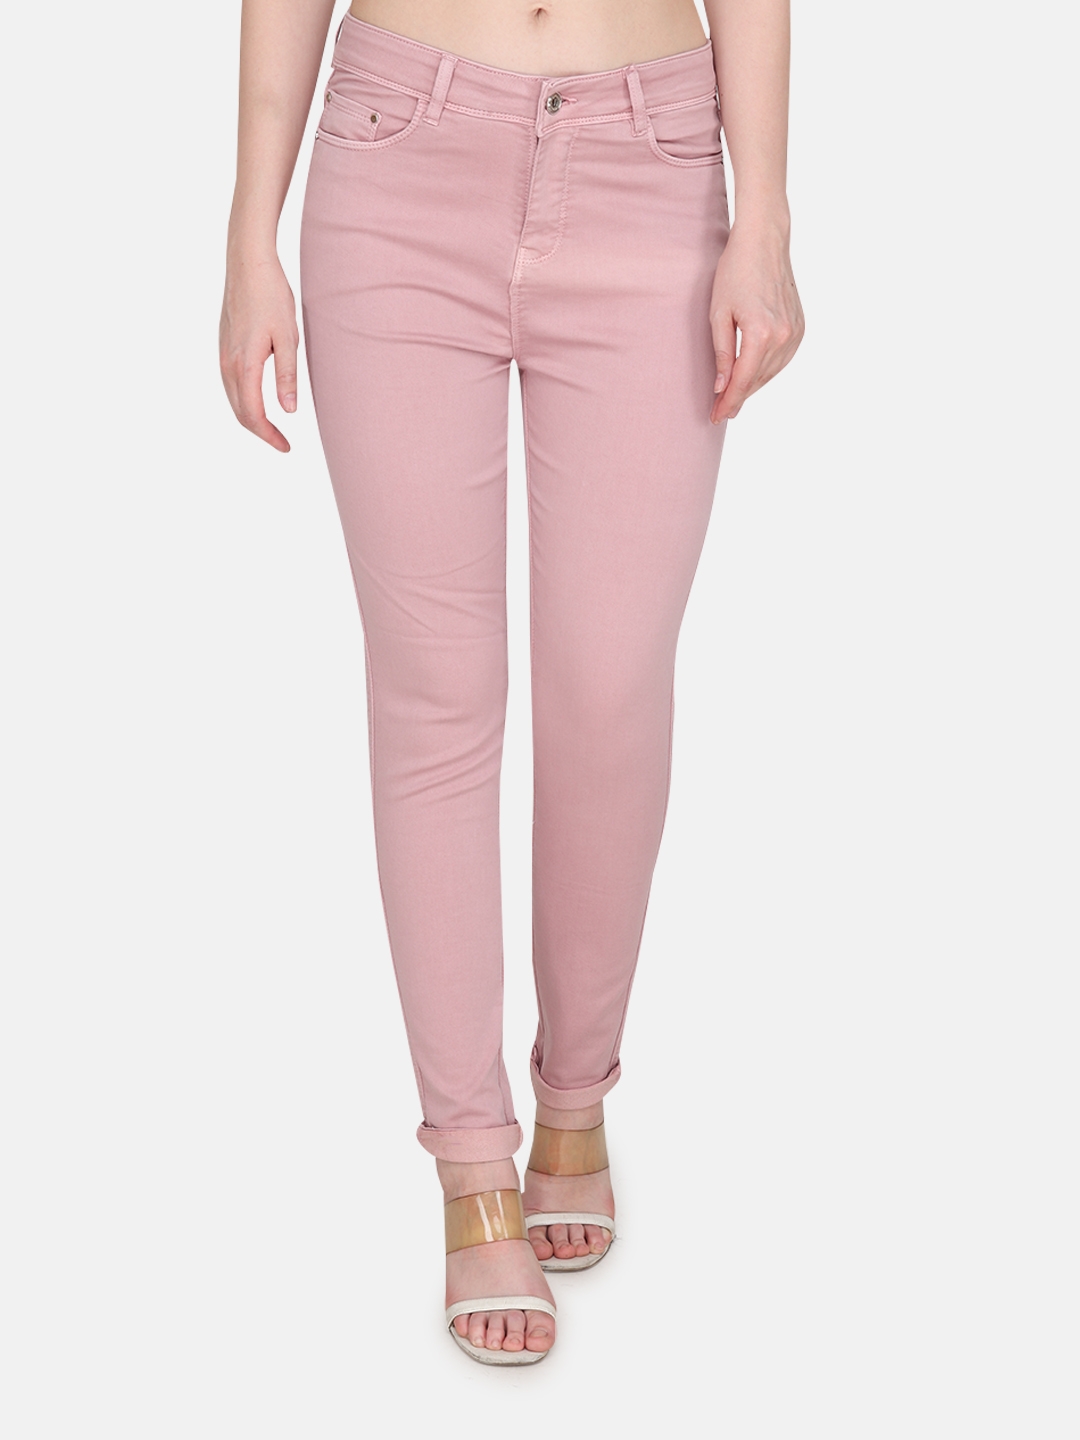 Albion Women Pink Denim Stretchable Jean